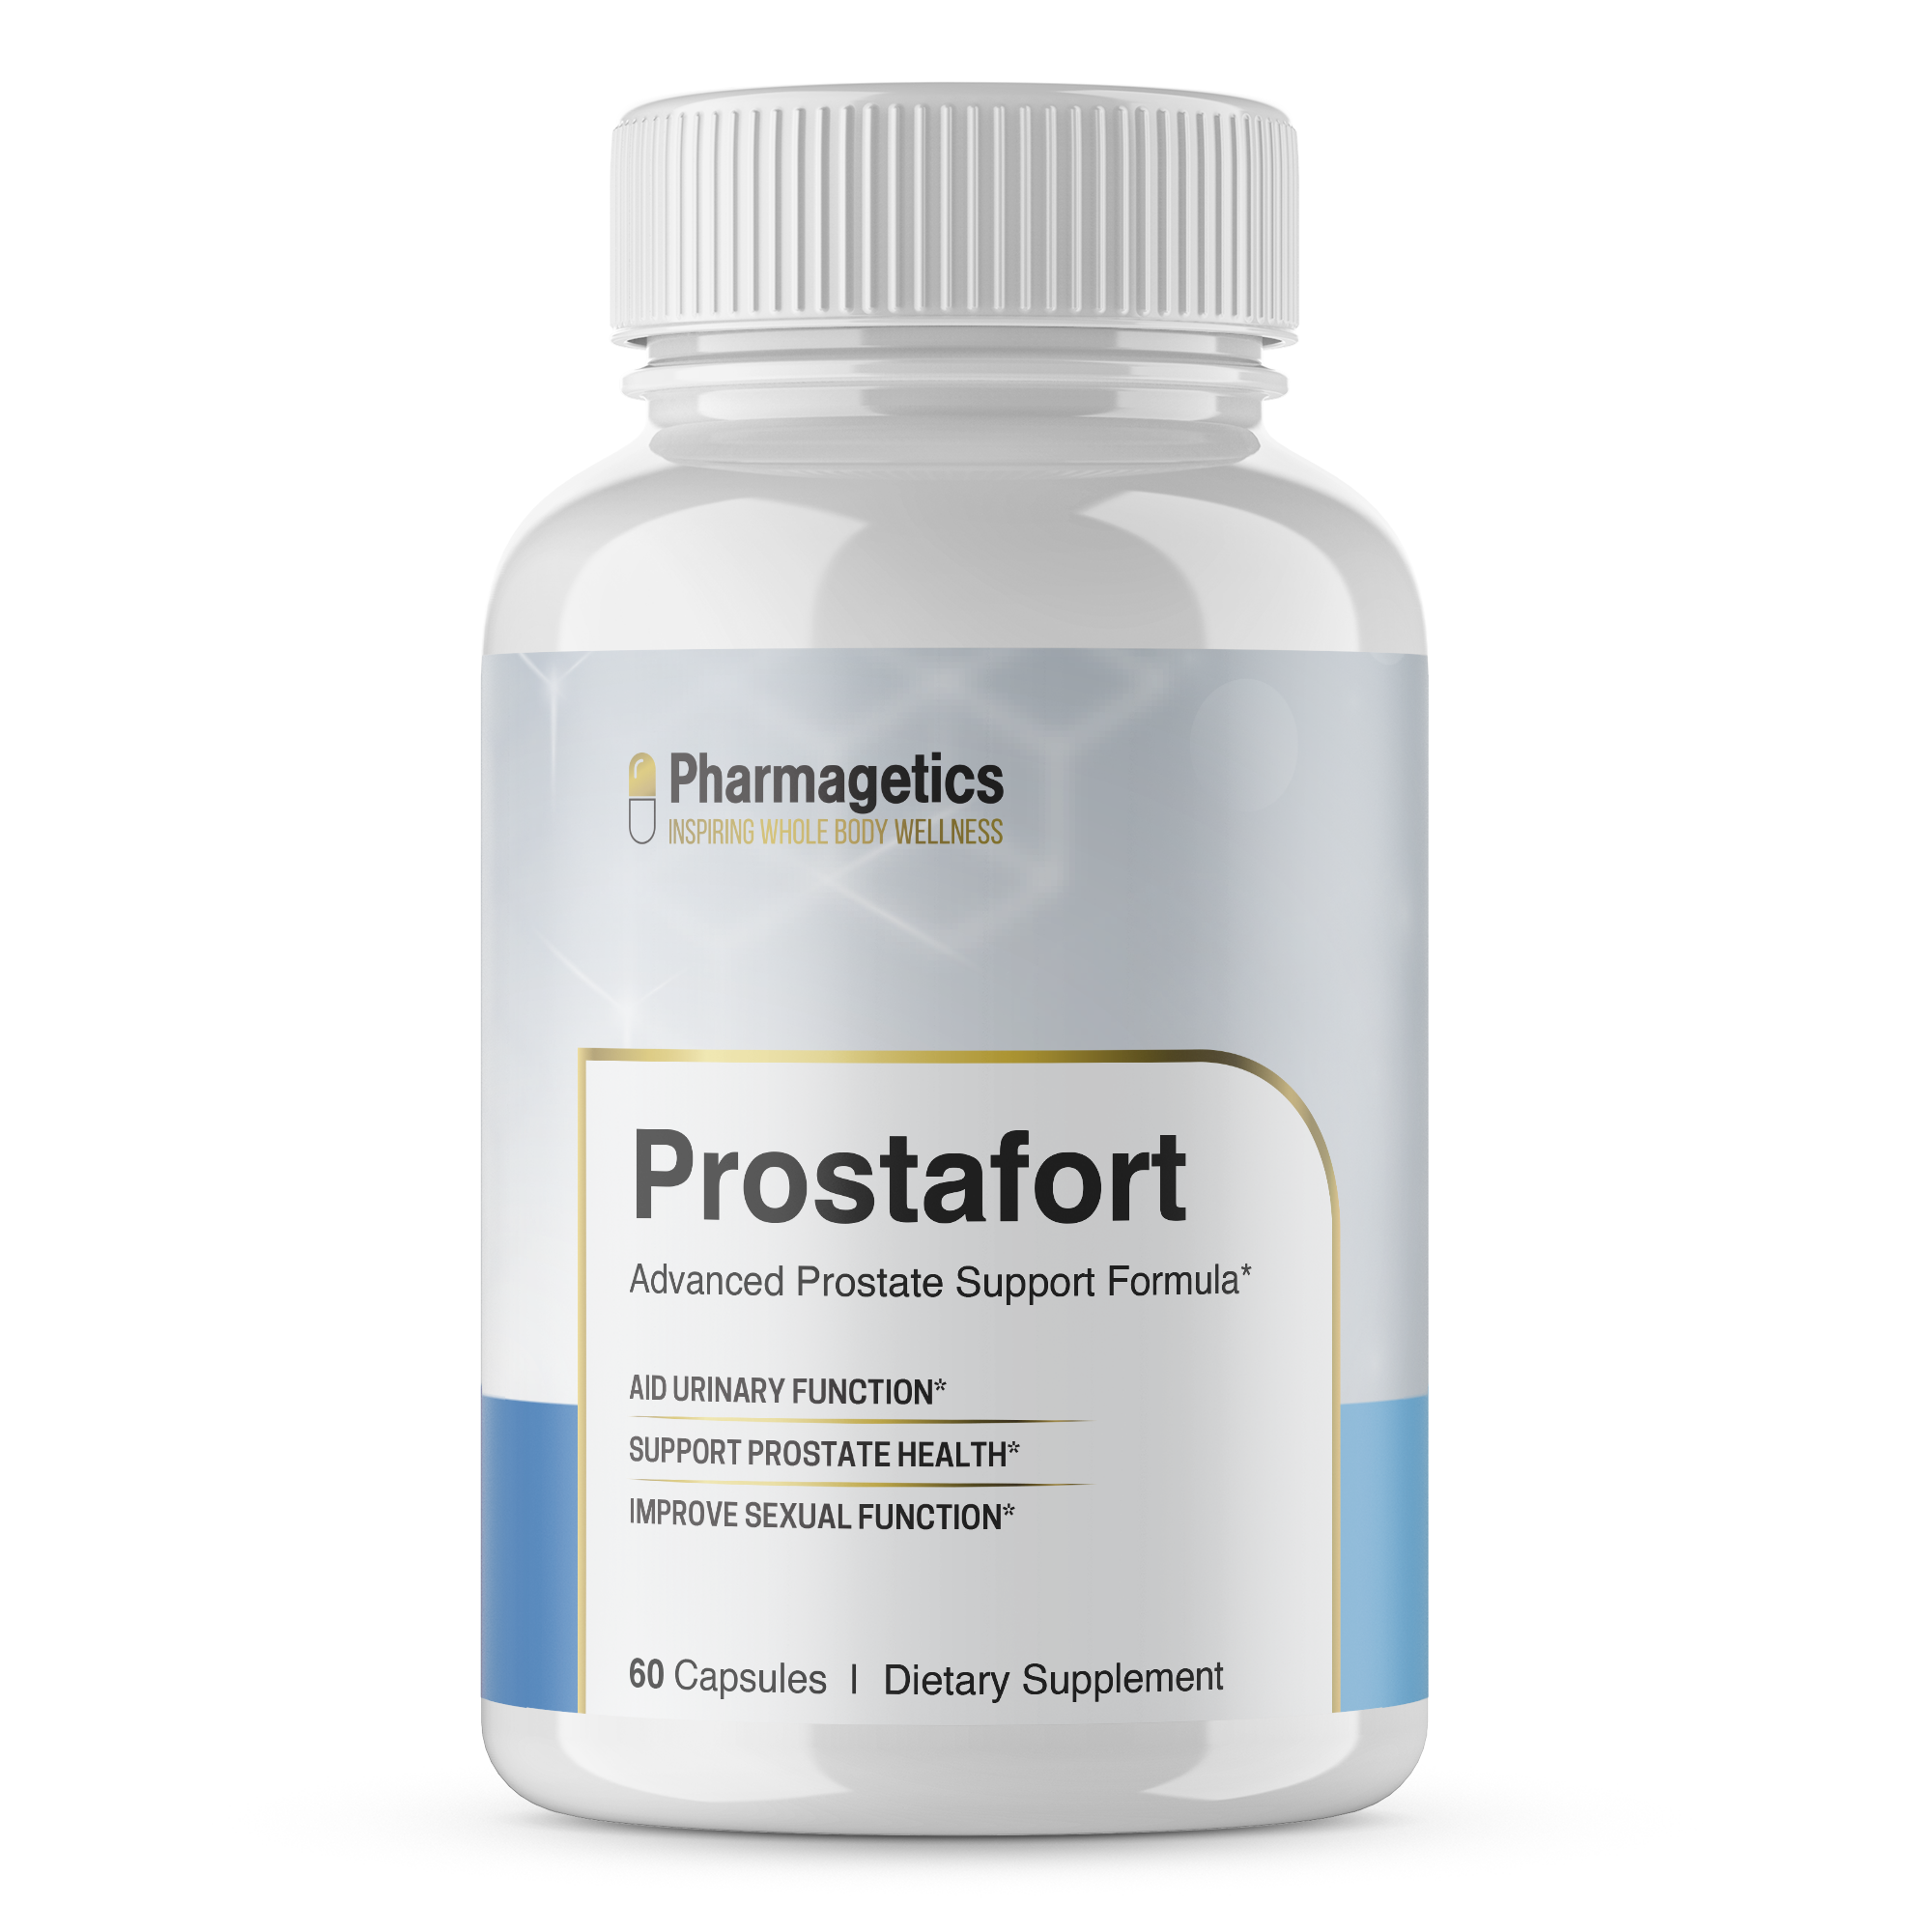 Prostafort Advanced Prostate Support Formula